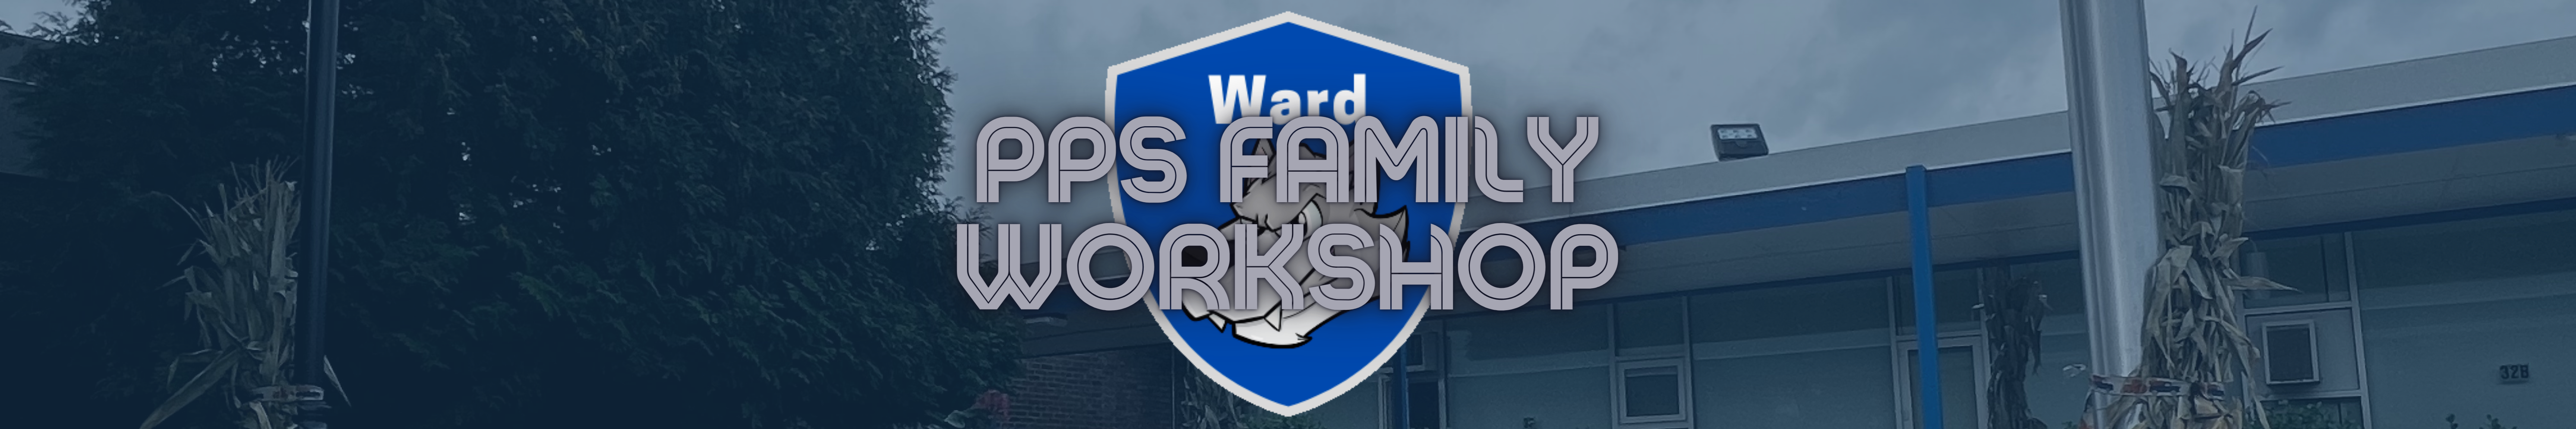 pps family workshop